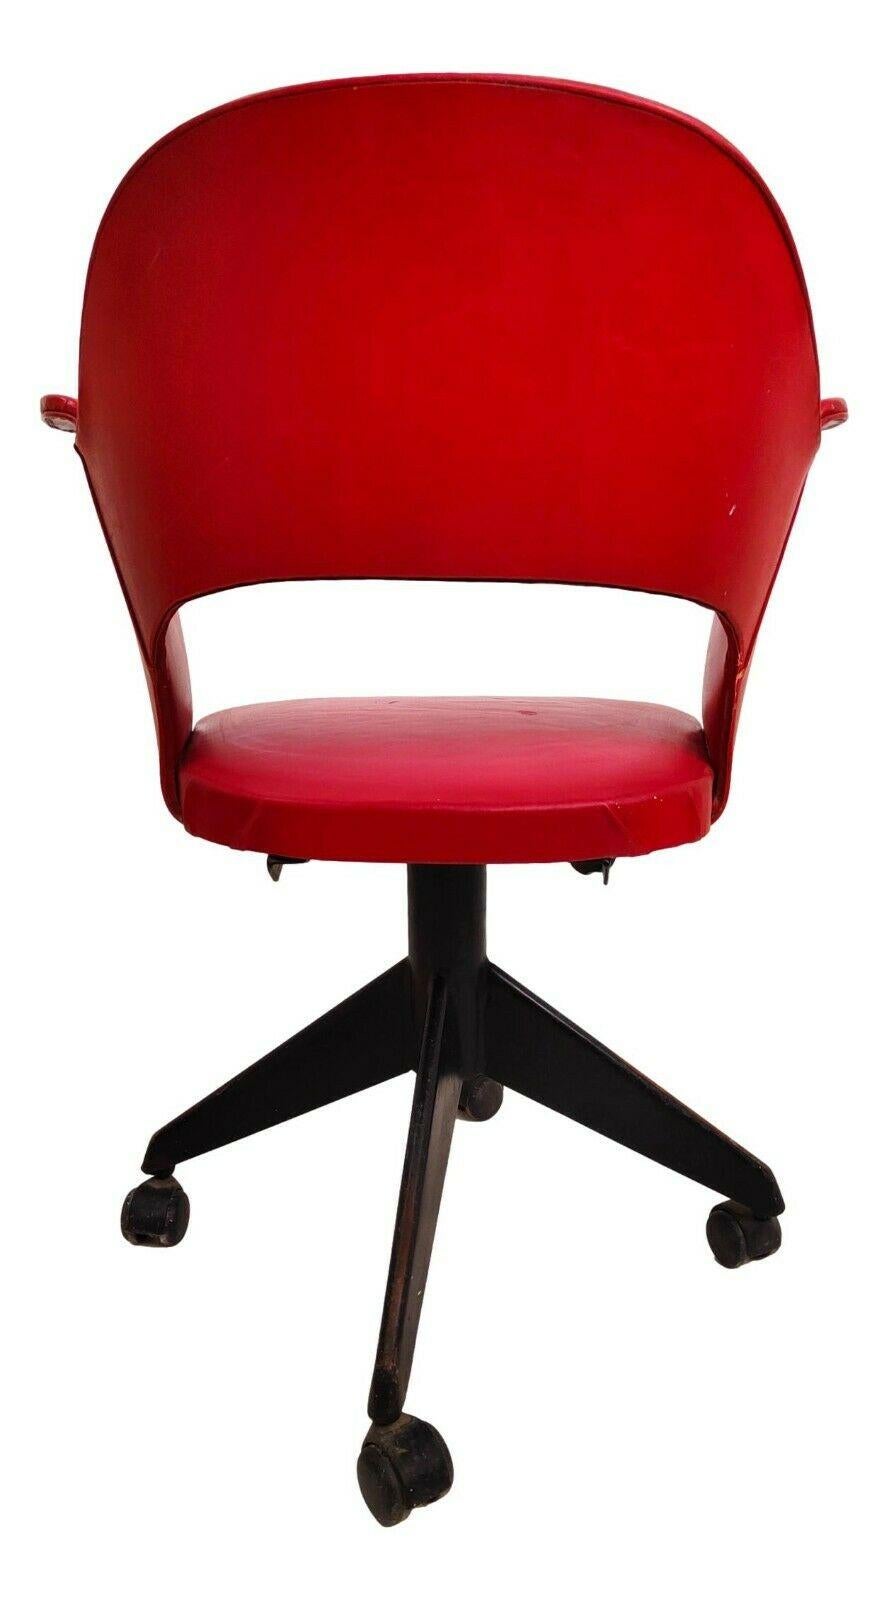 Italian Office Collection Chair Designed by Gastone Rinaldi for Rima Padova, 1960s